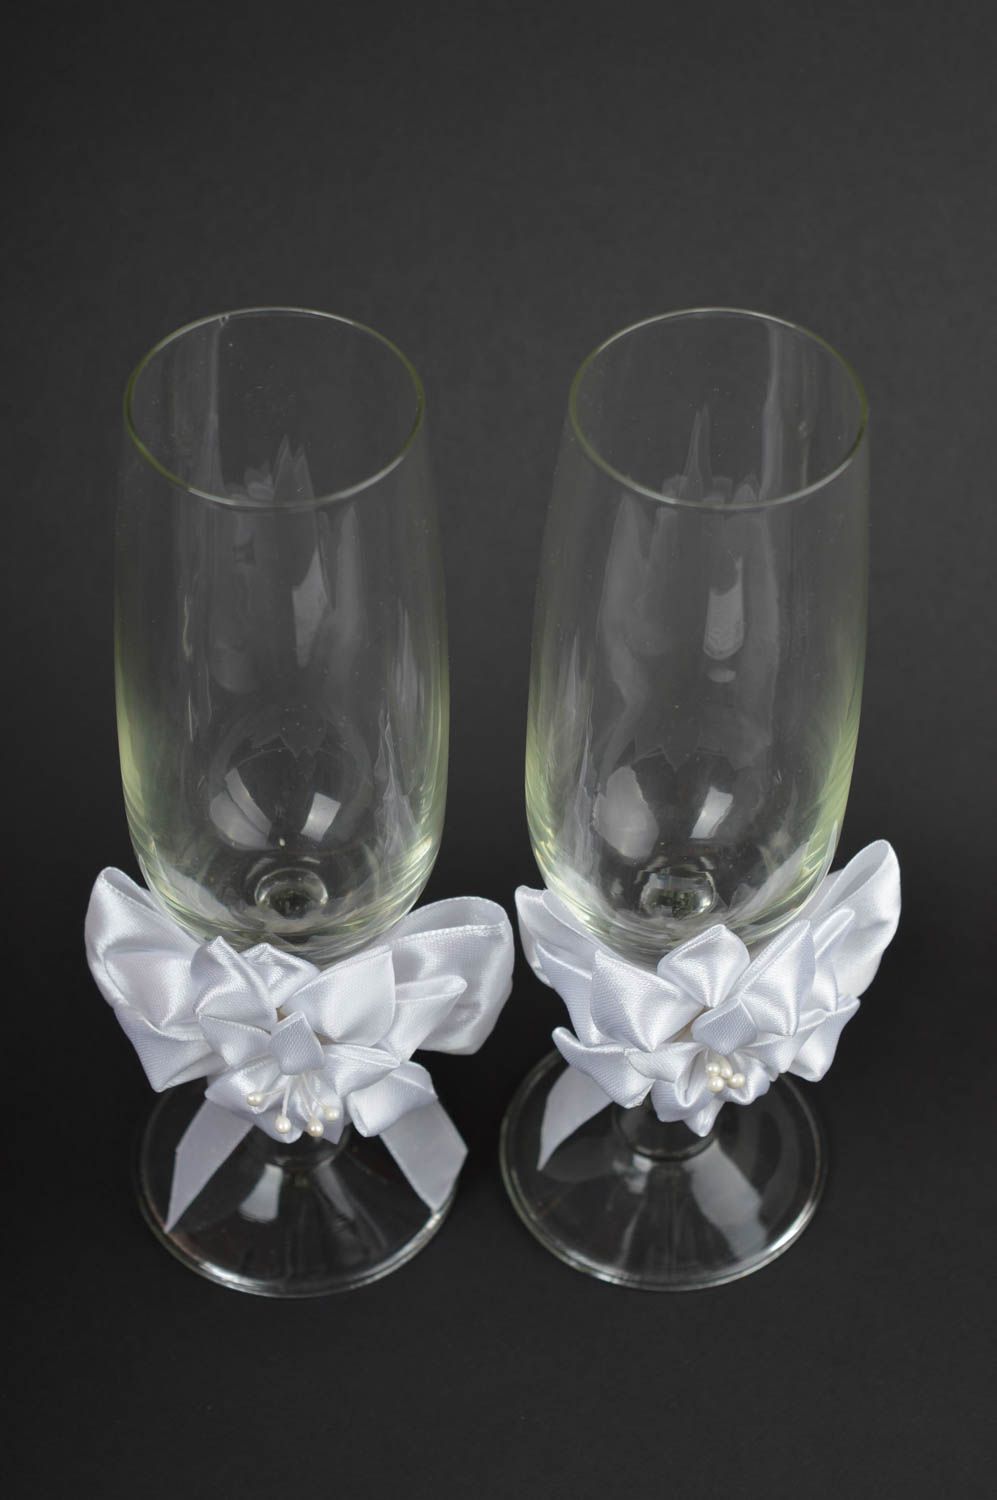 Handmade glasses for wedding decor ideas unusual glasses designer glasses photo 4